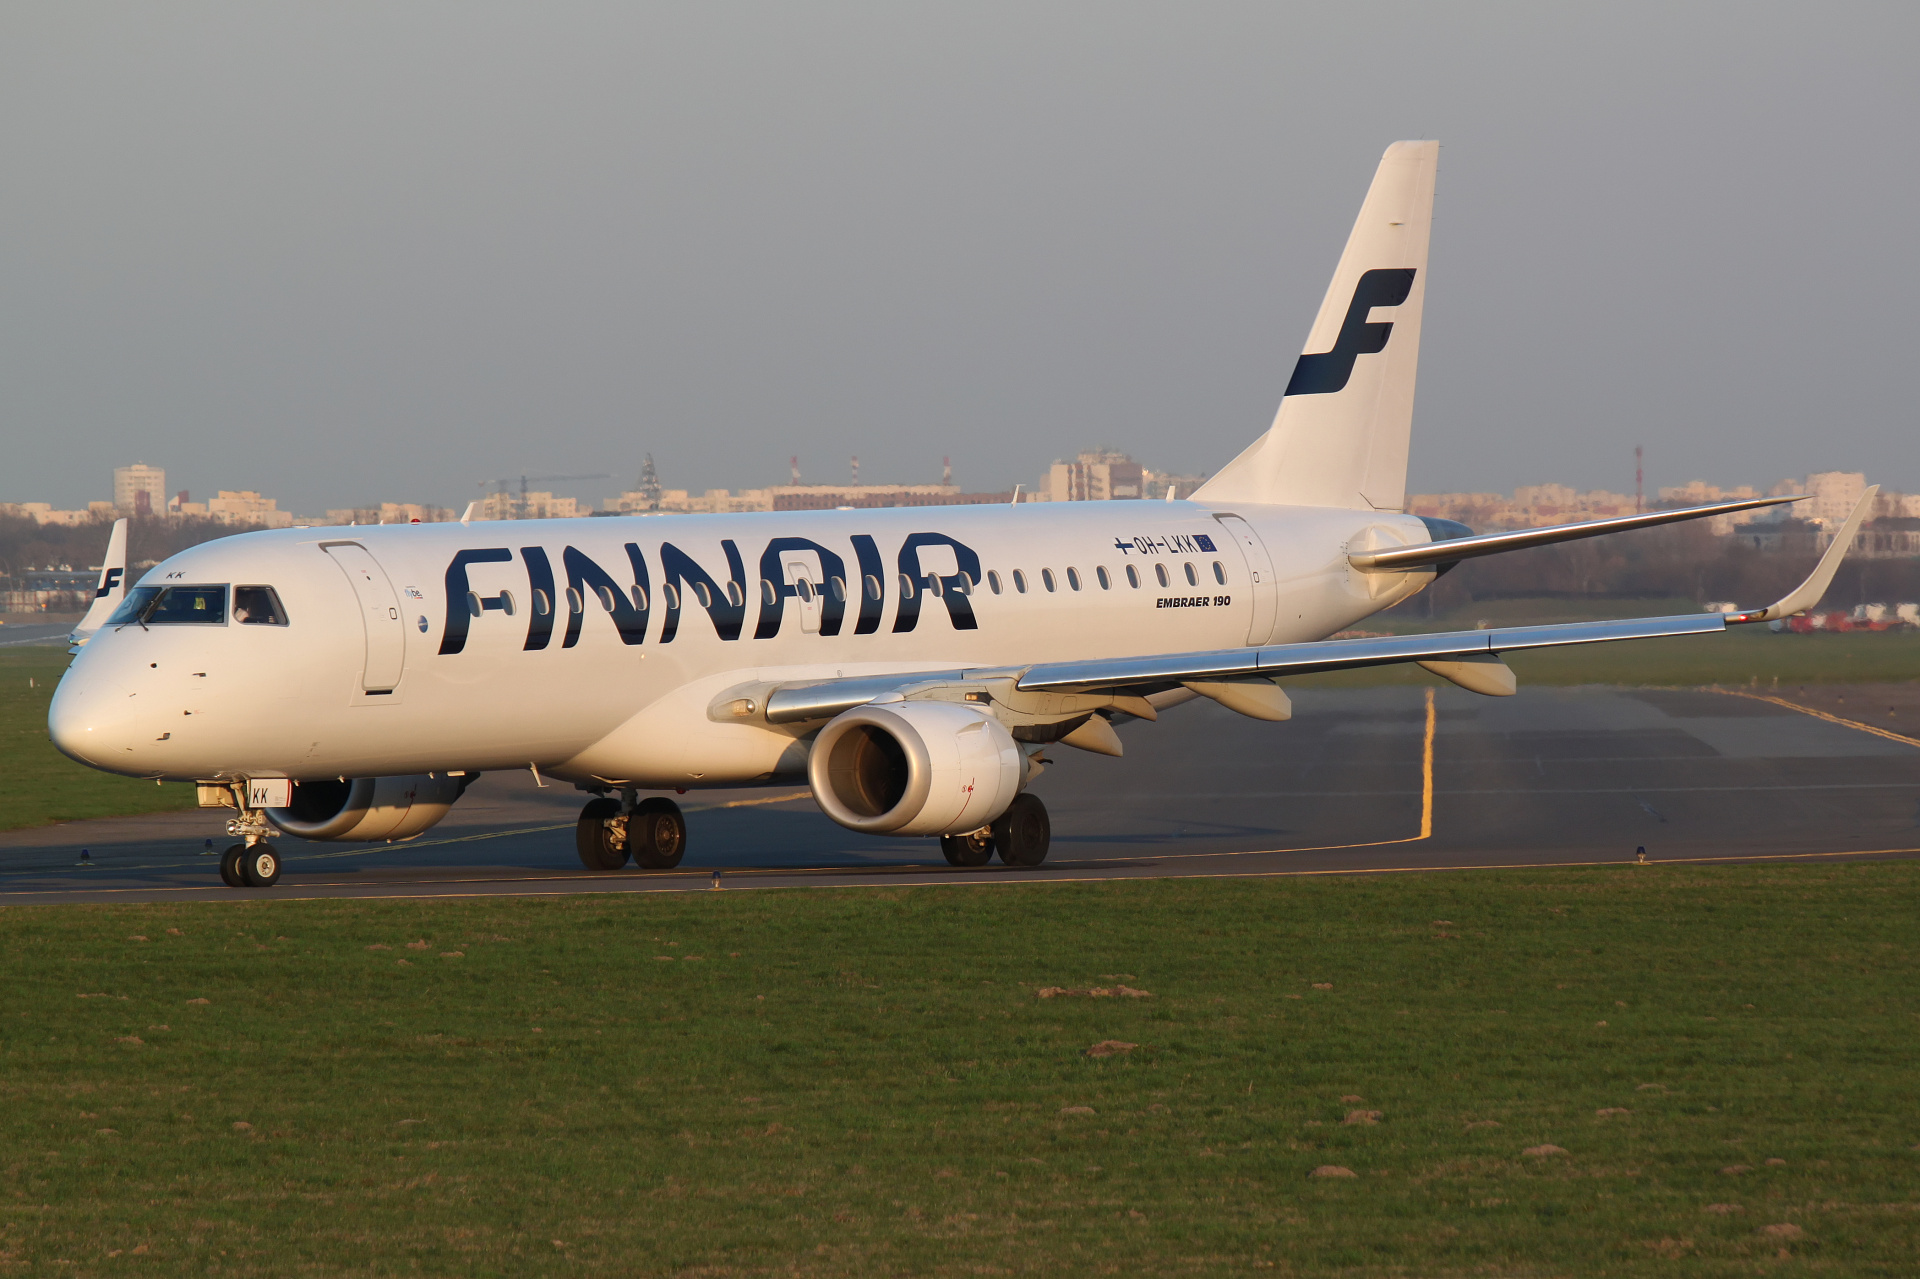 OH-LKK (Aircraft » EPWA Spotting » Embraer E190 » Finnair)